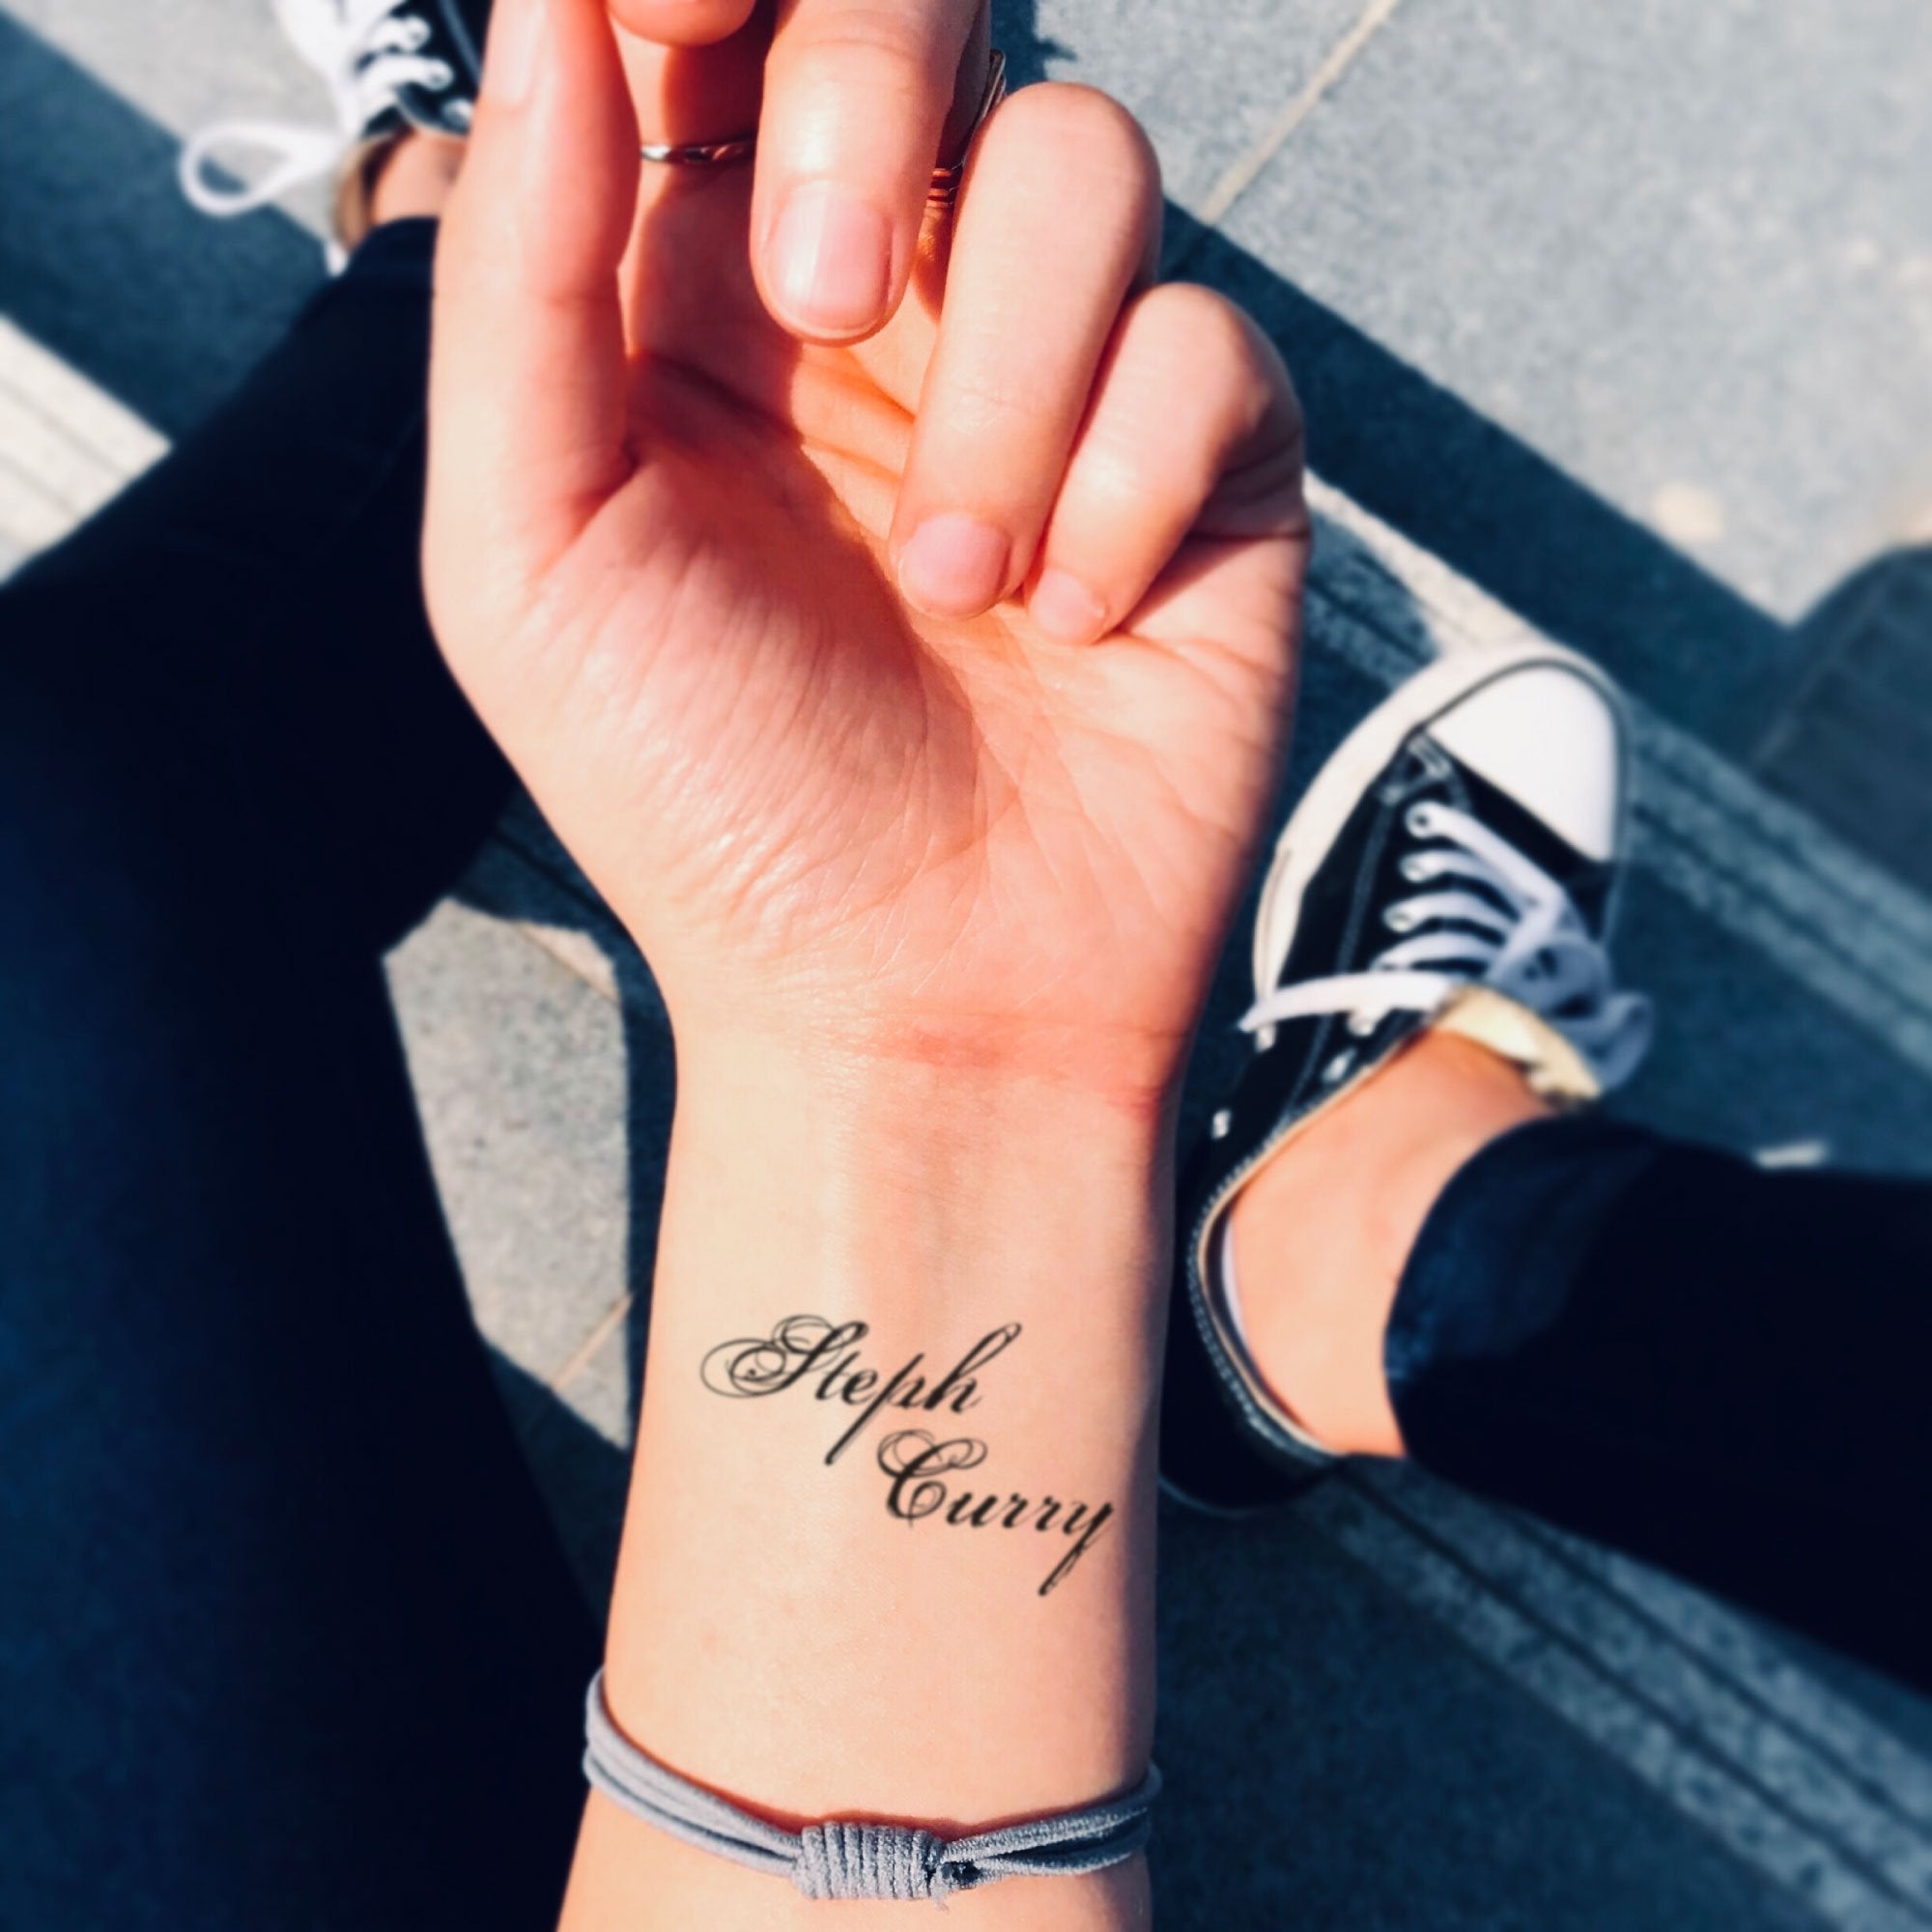 Steph Curry Temporary Tattoo Sticker - OhMyTat